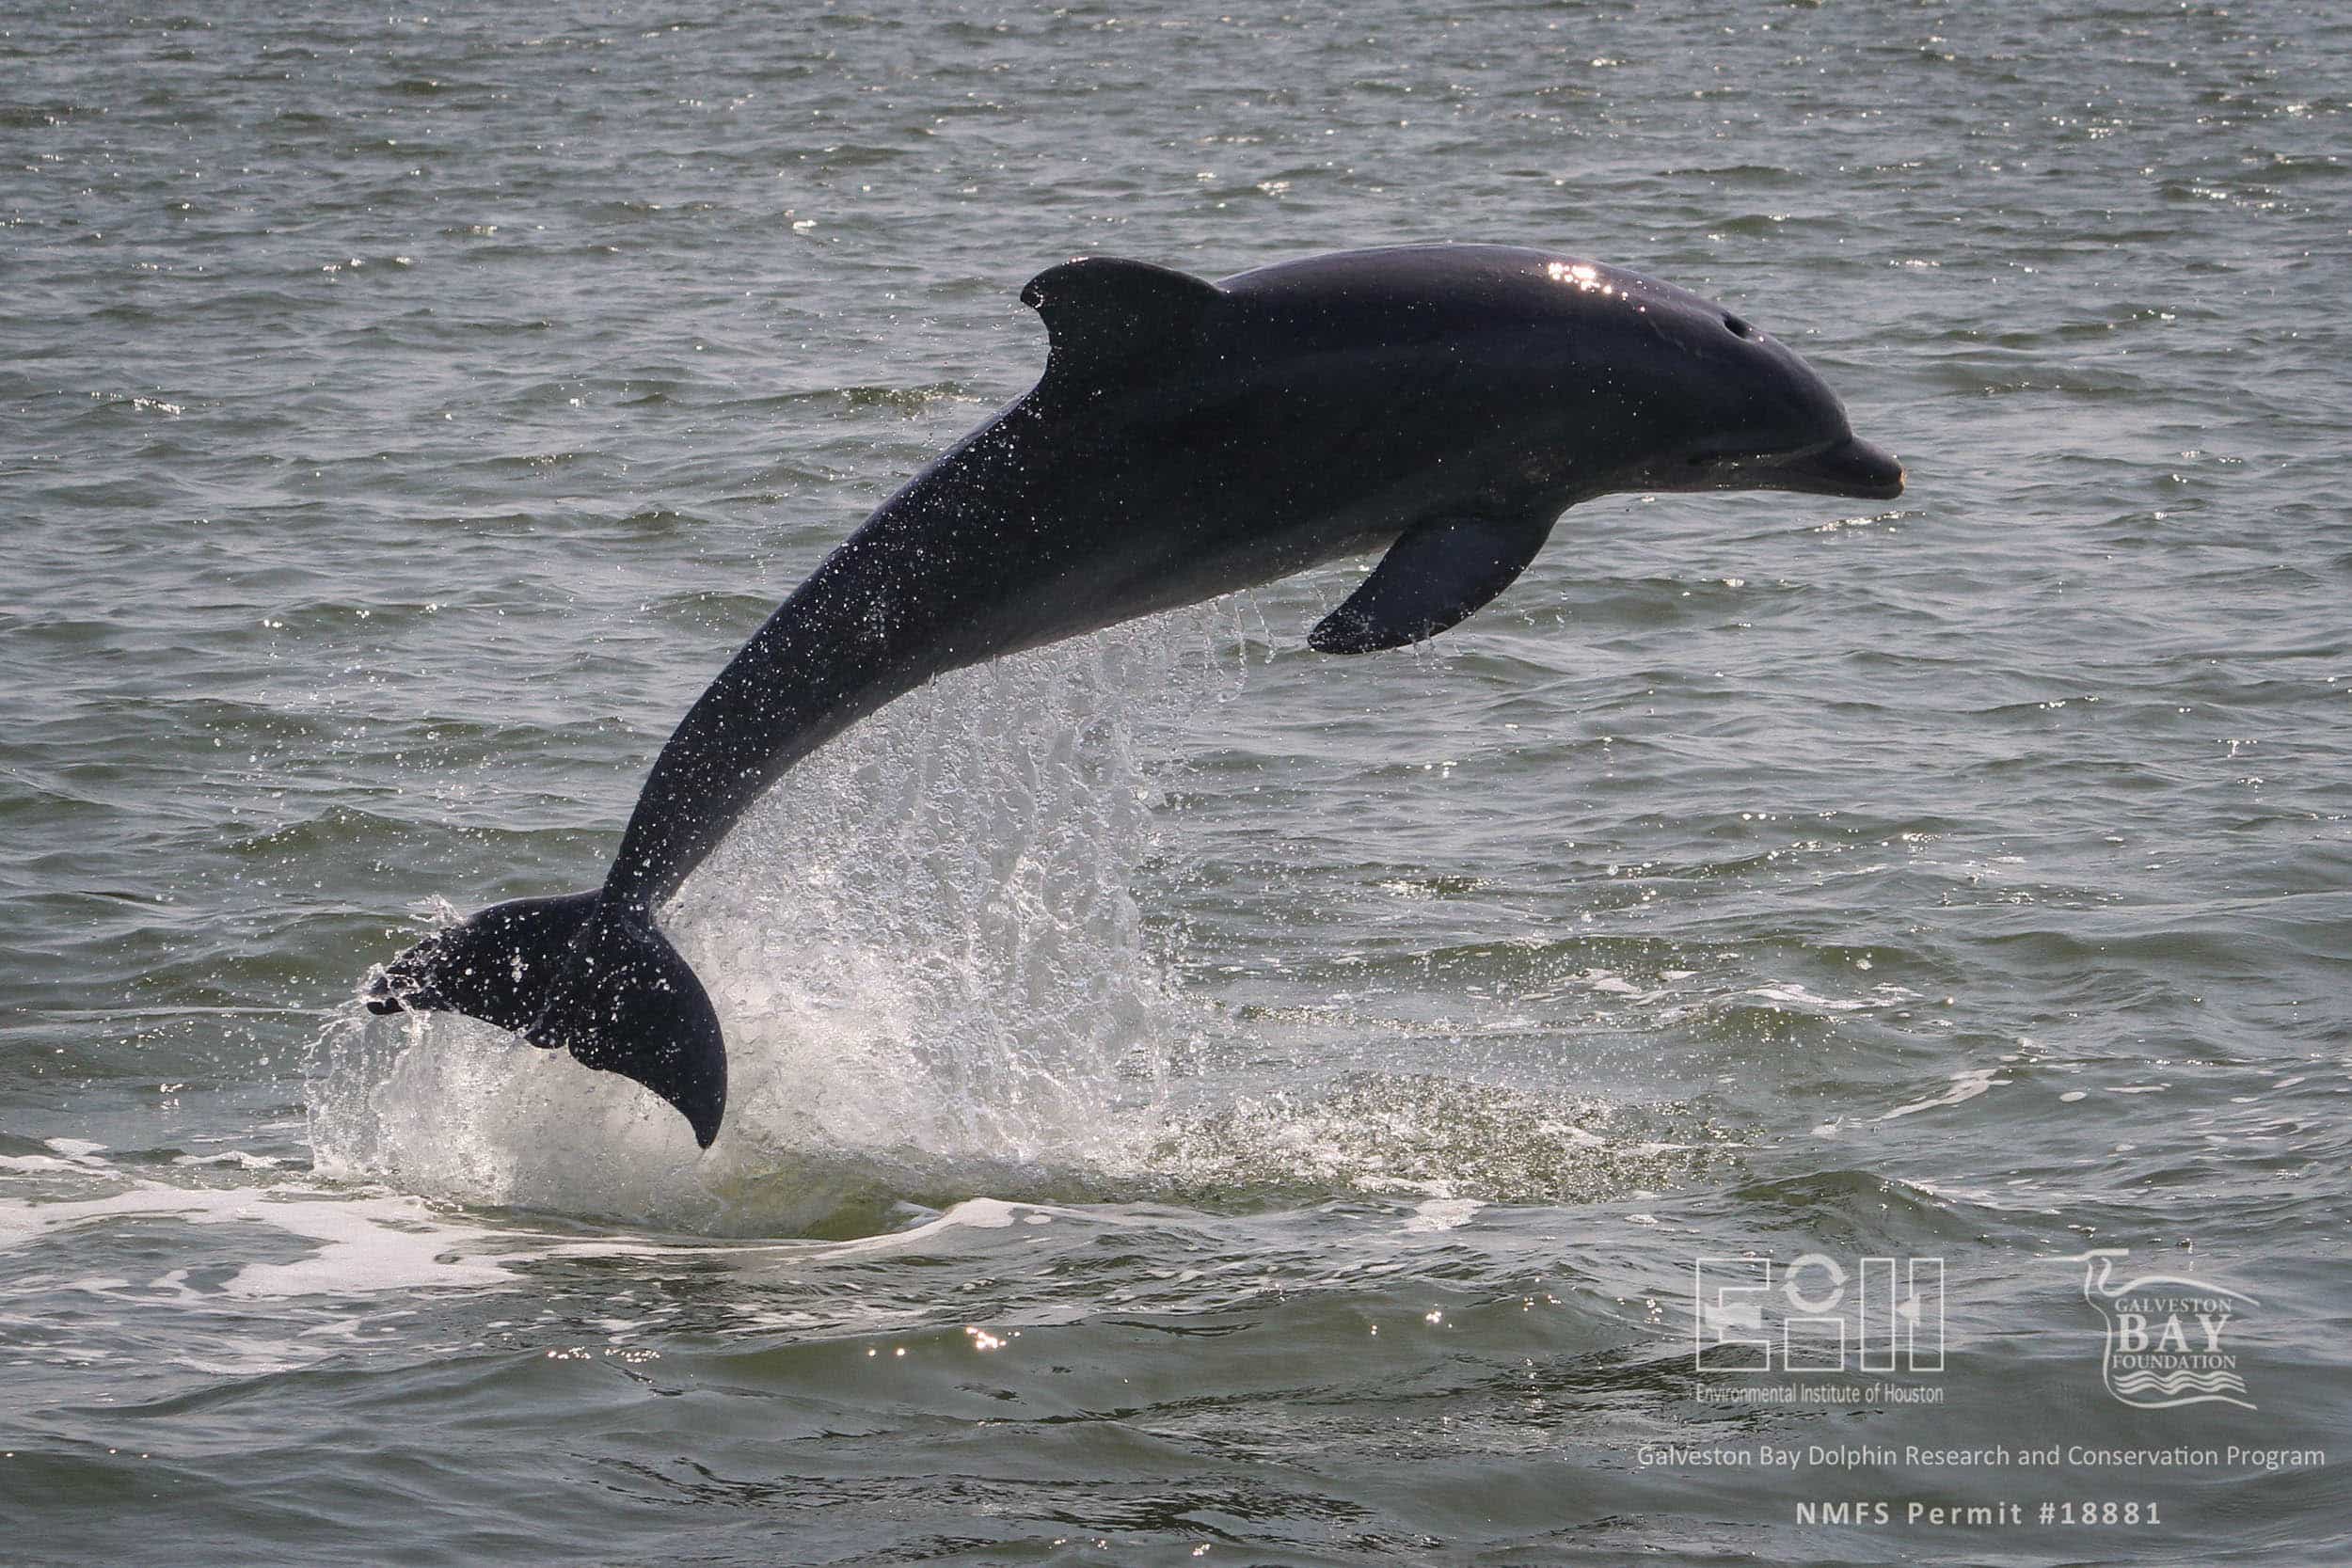 Galveston Bay Dolphin Research